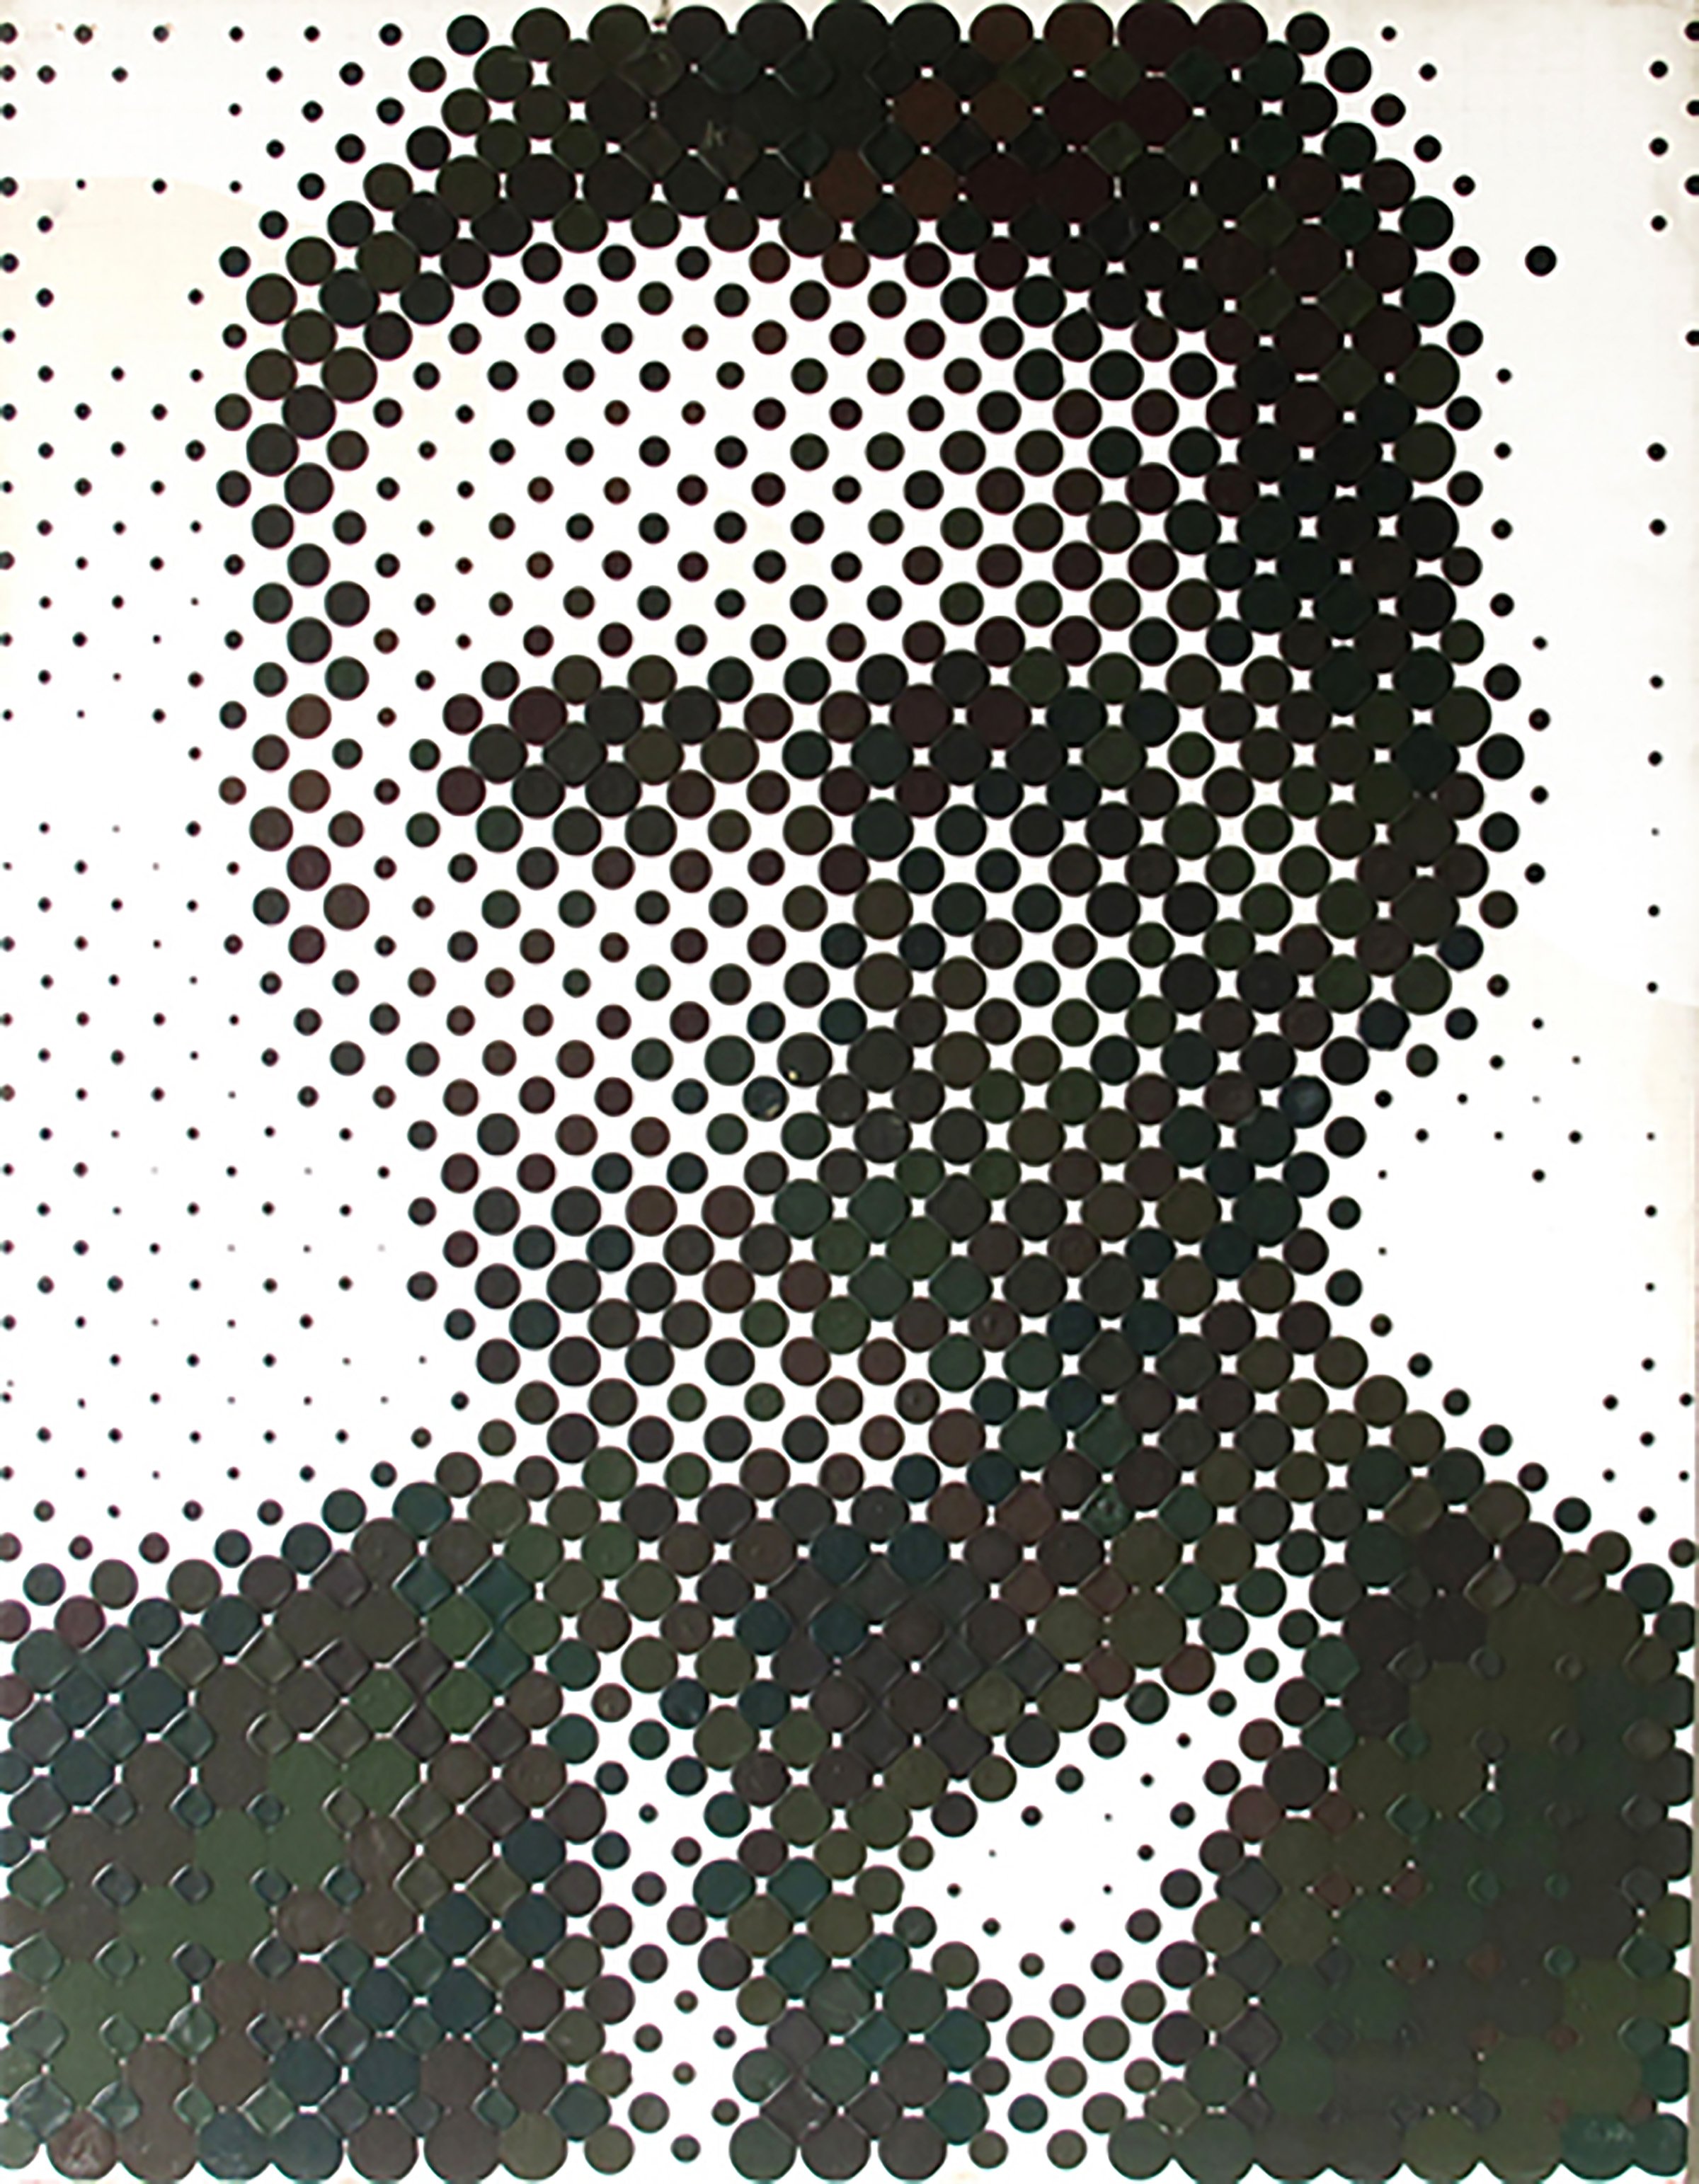 Memory Man 1 2004 Oil on canvas on board 122 x 94 cm 